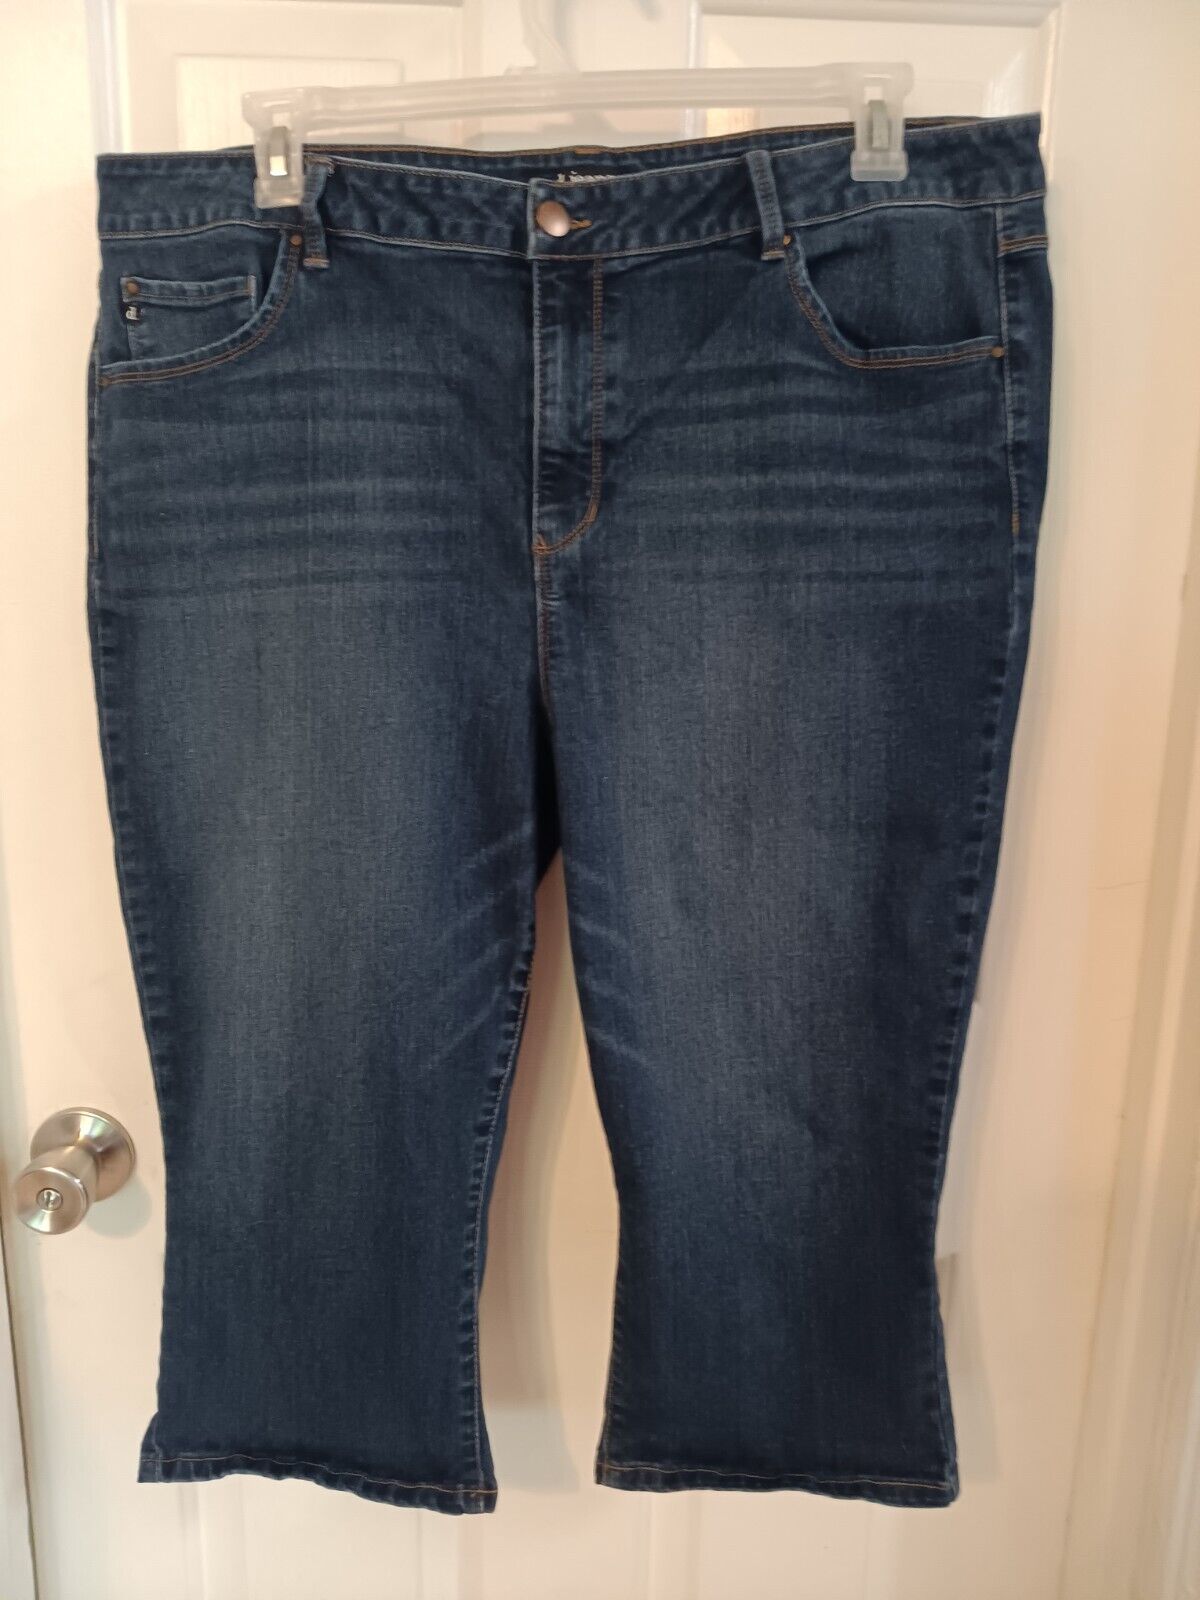 d.jeans~~~STRETCH denim JEAN CAPRIS~Pedal Pushers~womens size 22W